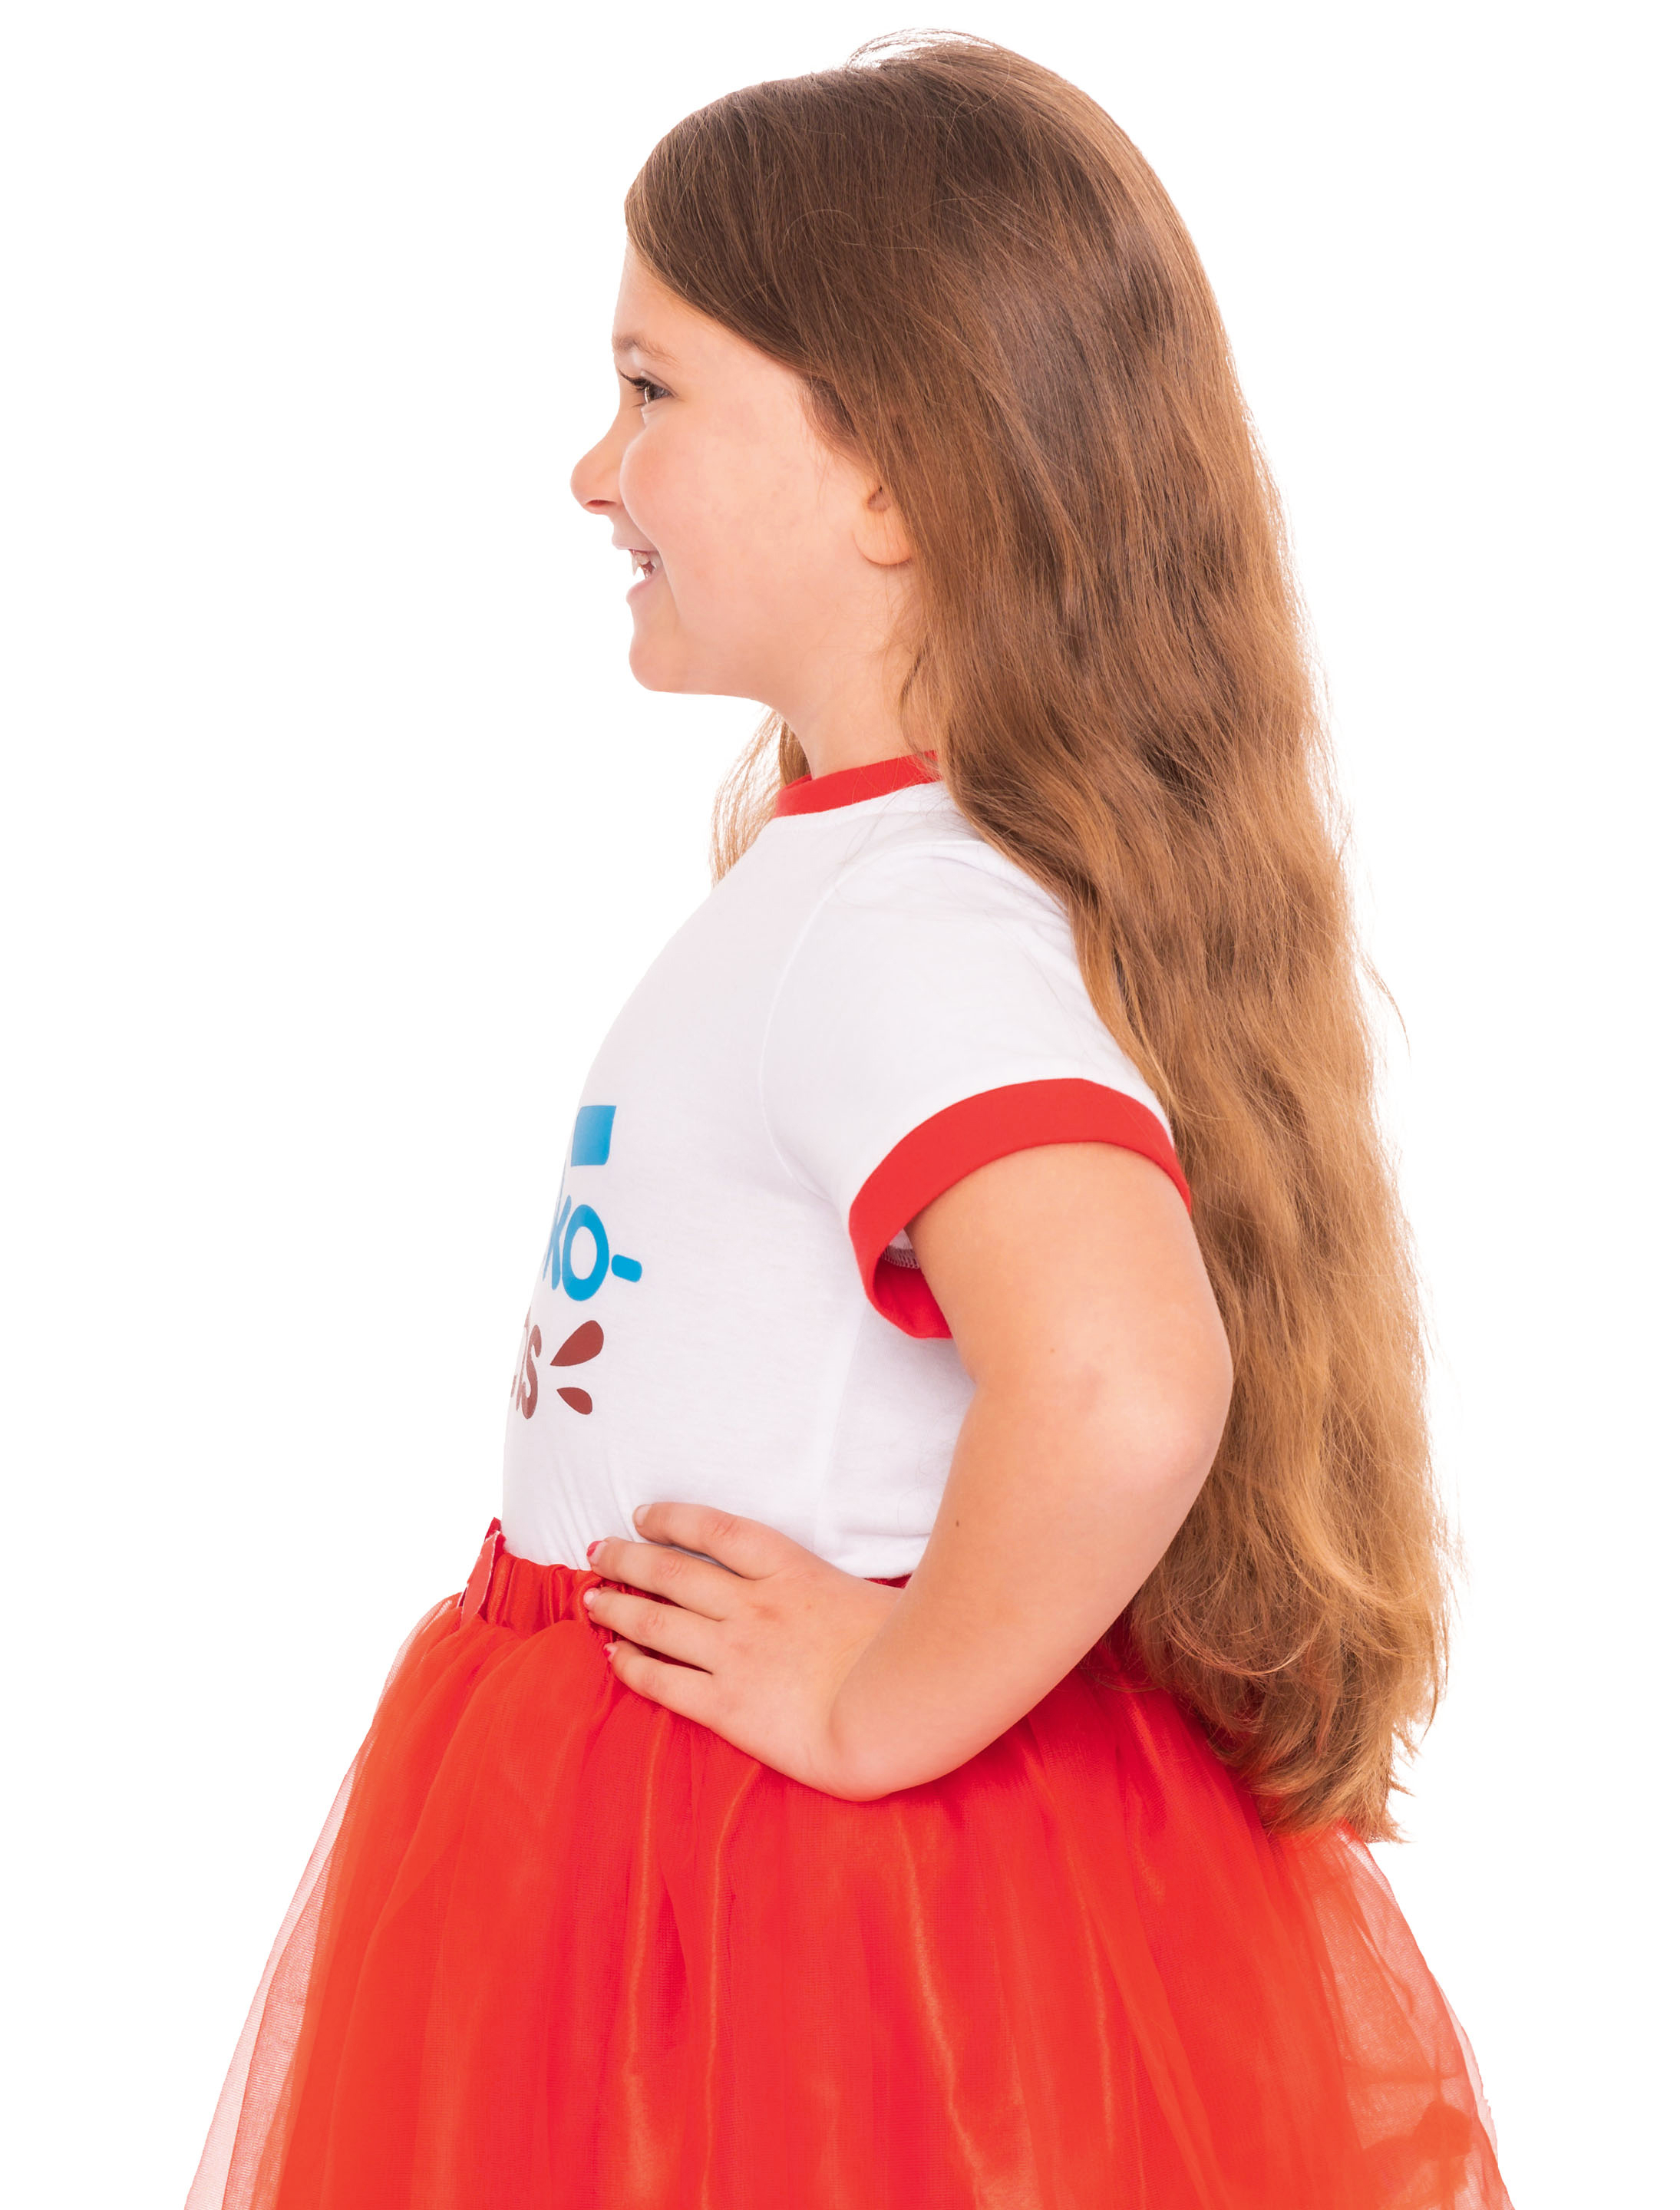 T-Shirt kinder Schoko-Bons Kinder rot/weiß 152-164